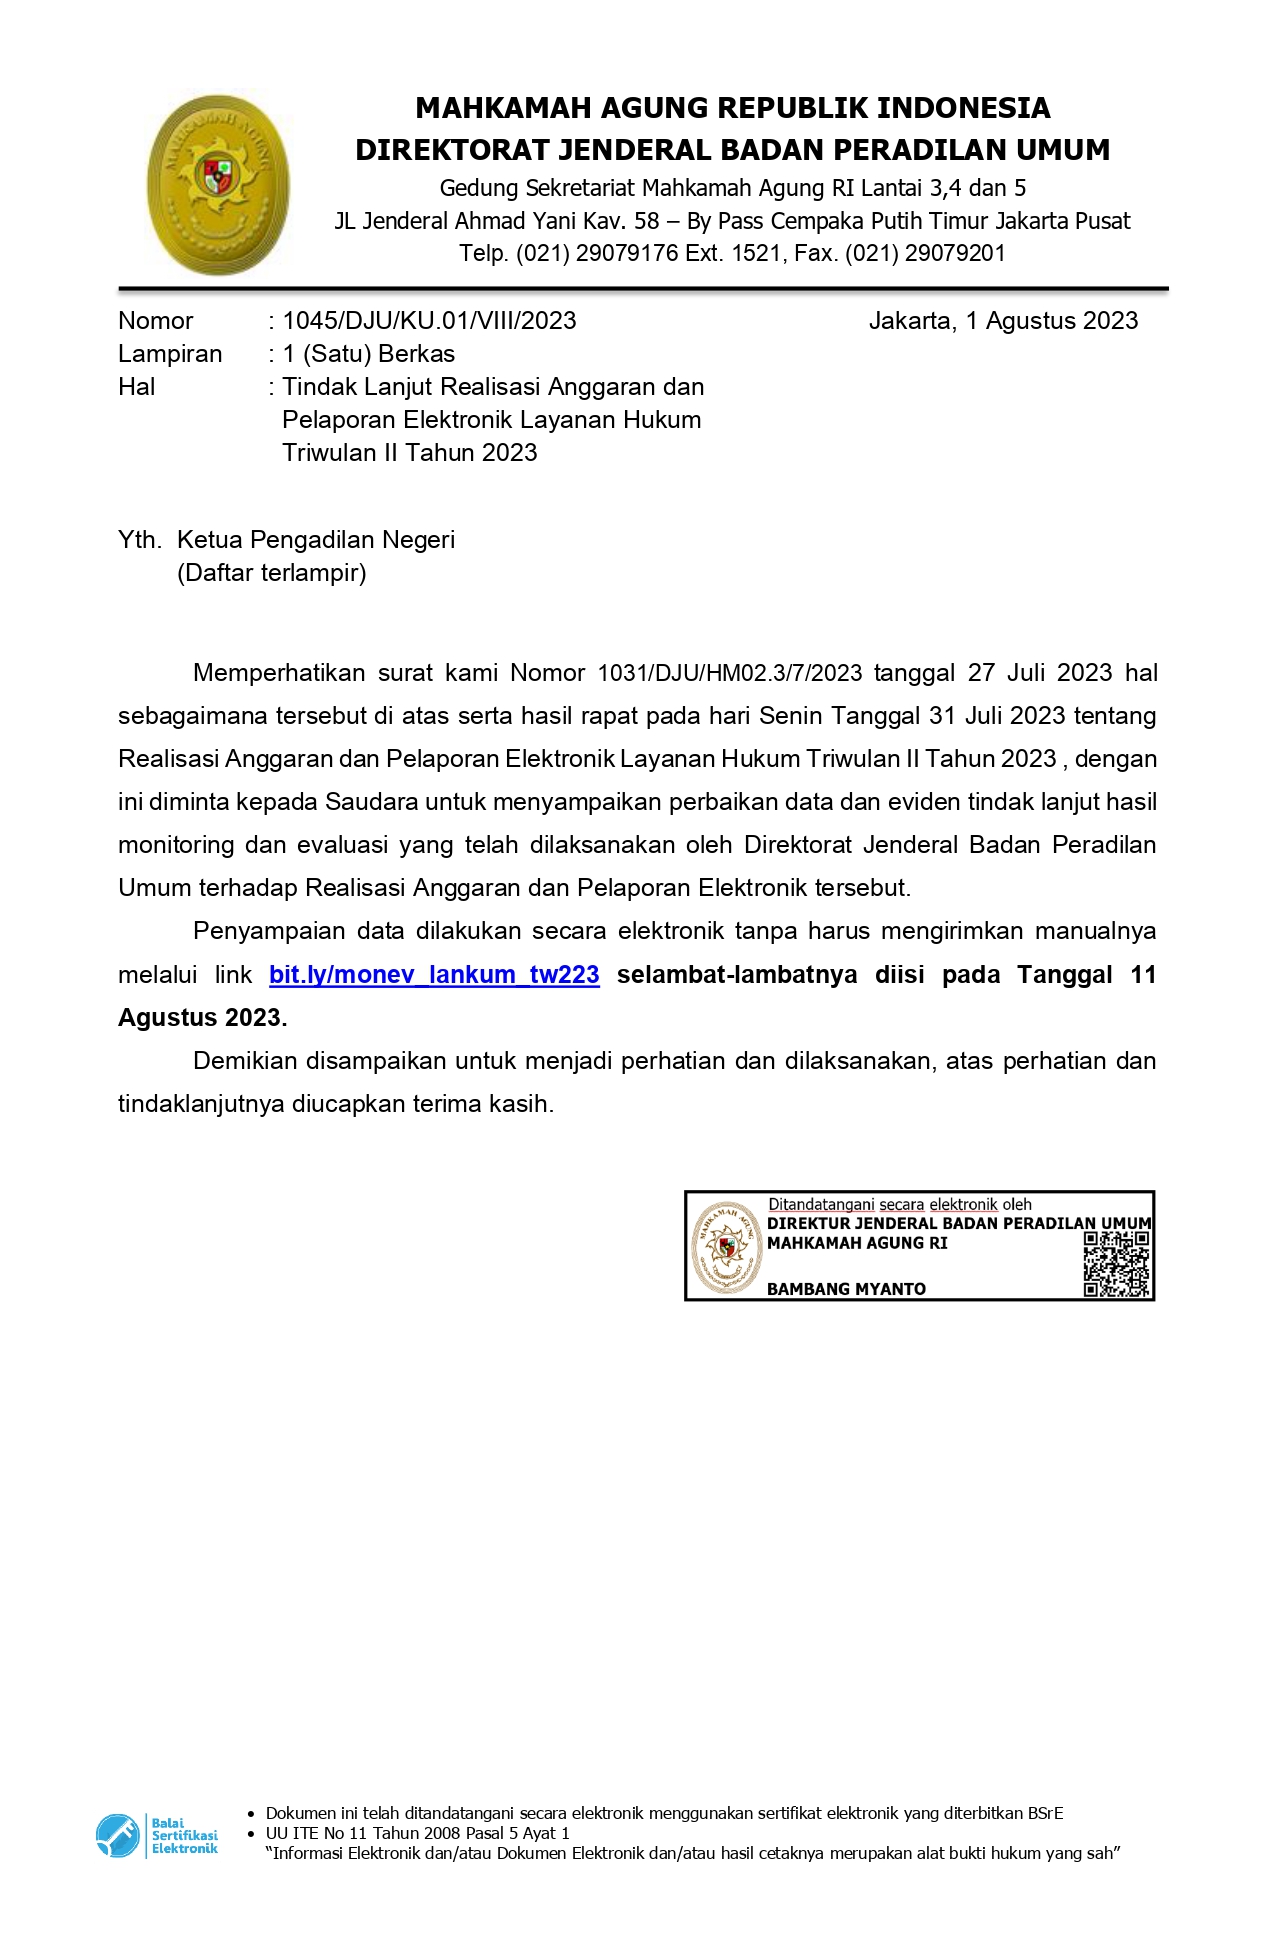 surat tindaklanjut realisasi anggaran dan pelaporan elektronik layanan hukum_sign_page-0001.jpg